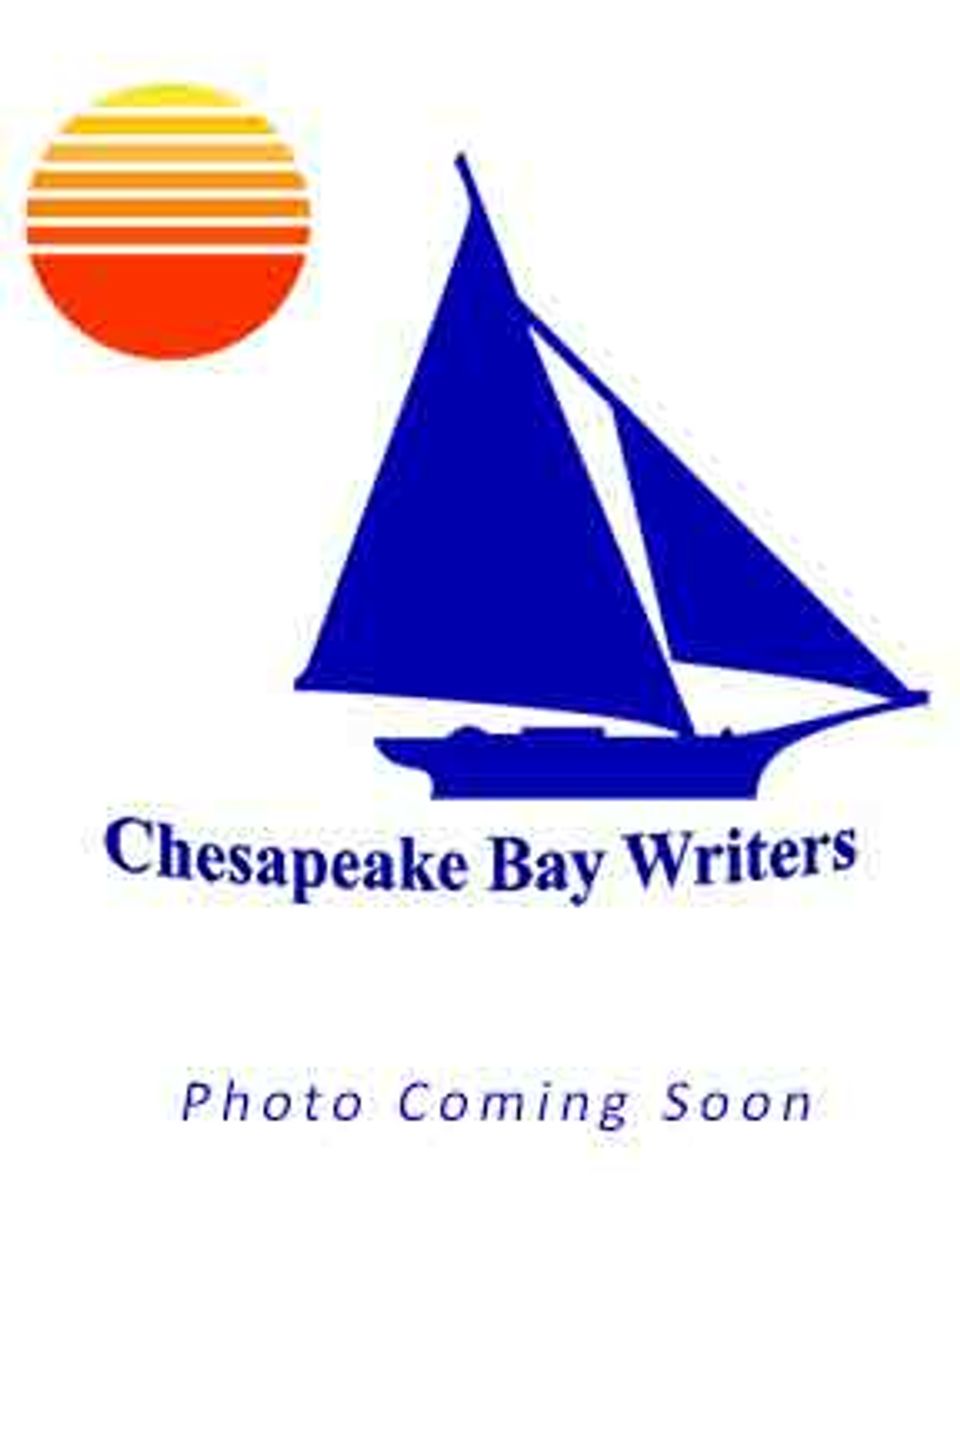 Chesapeake bay writers logo 4x6